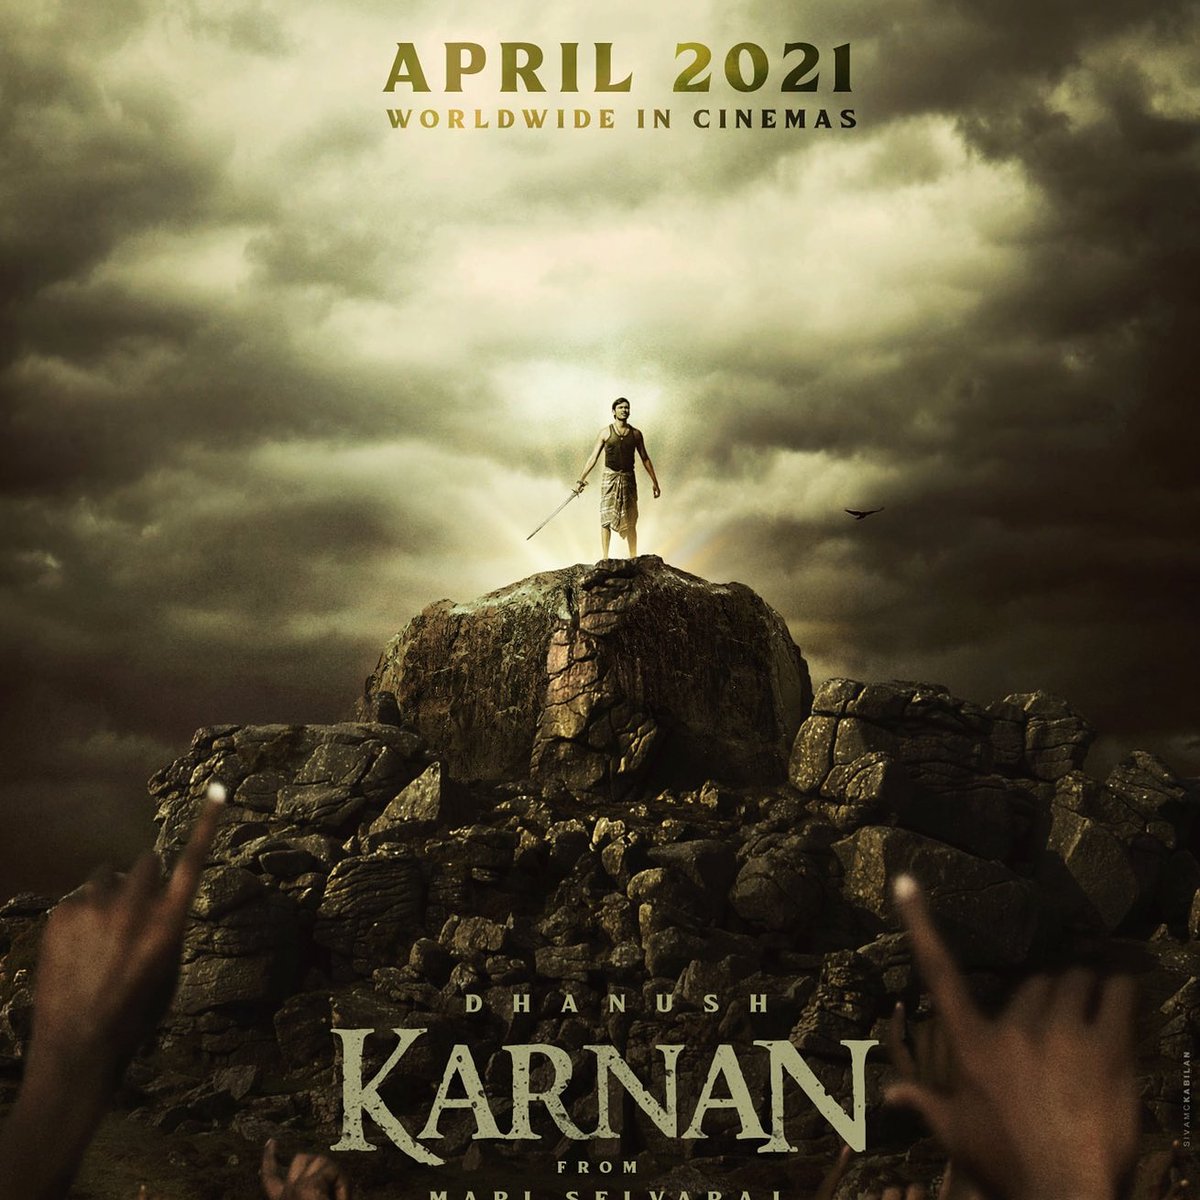 Karnan will see you in theatres this summer. #aprilrelease 

#KarnanTeaser #Dhanush #karnanmovie #theatre #theatrerelease #KarnanTeaser #Karnan